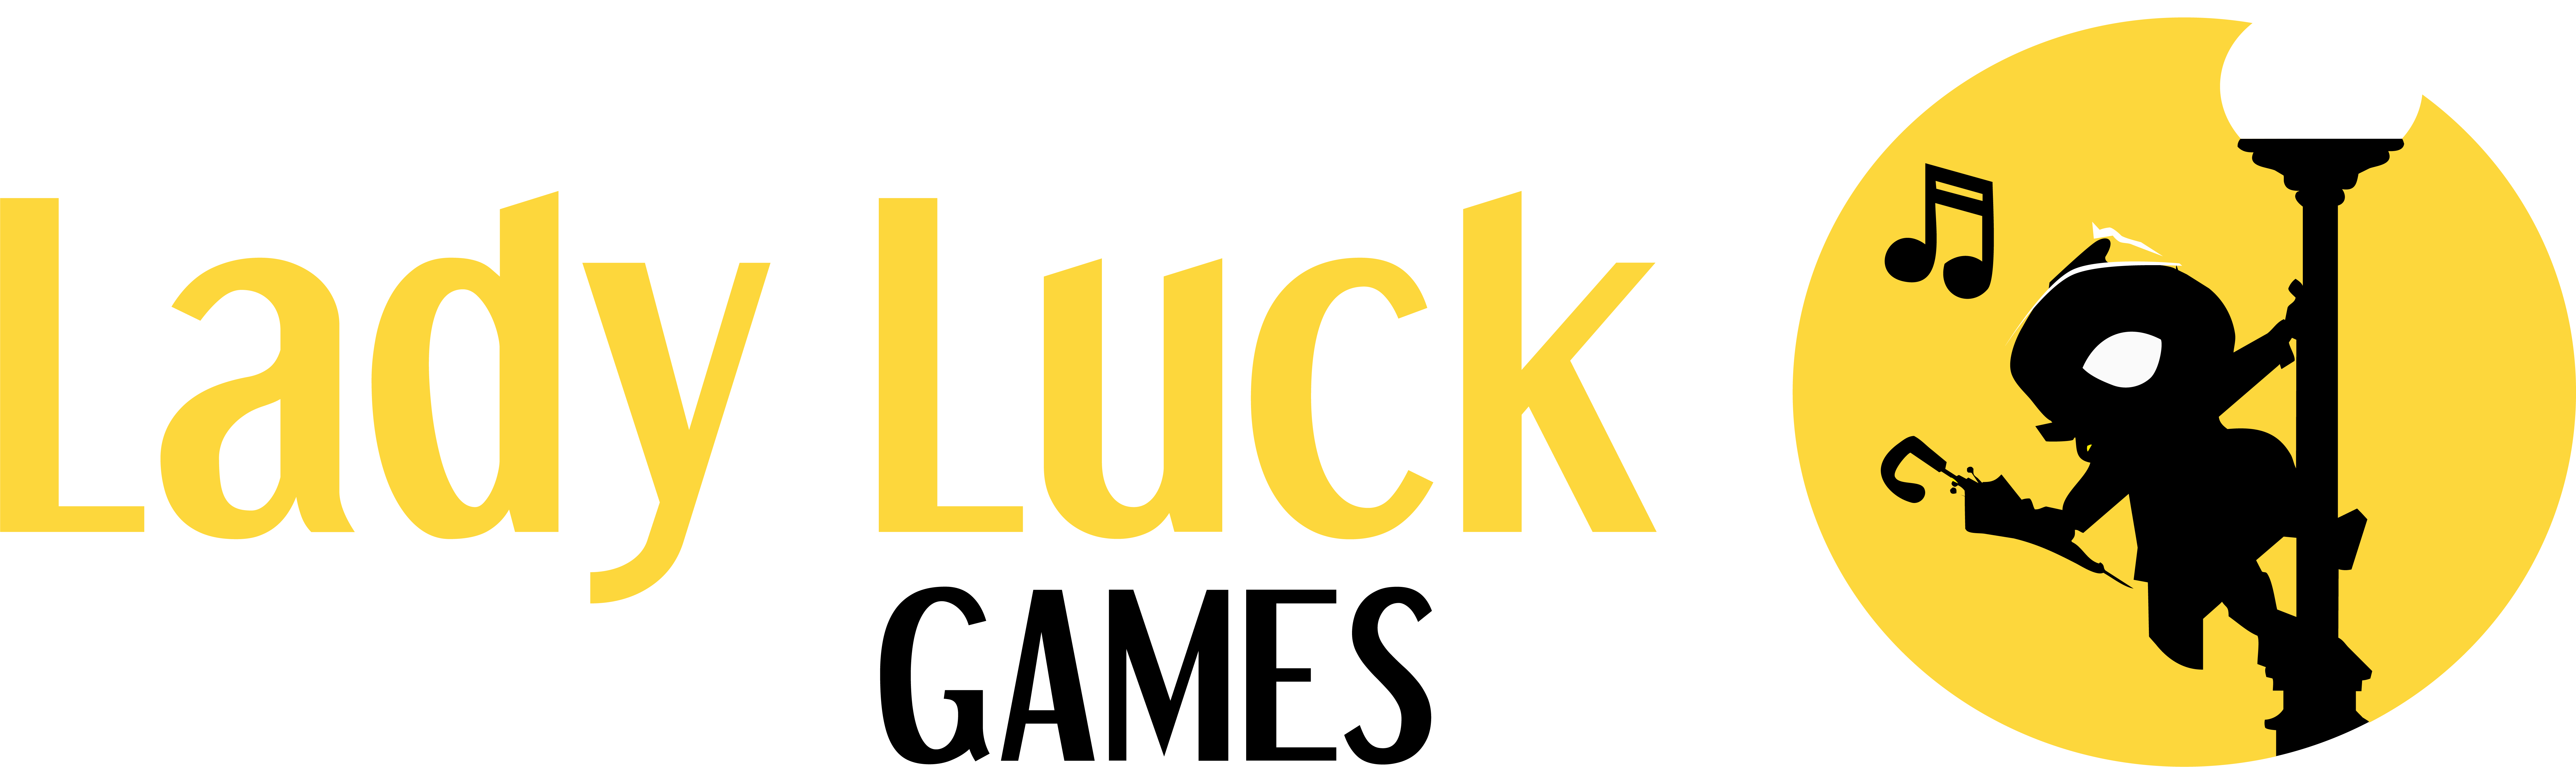 Lady Luck Games juegos